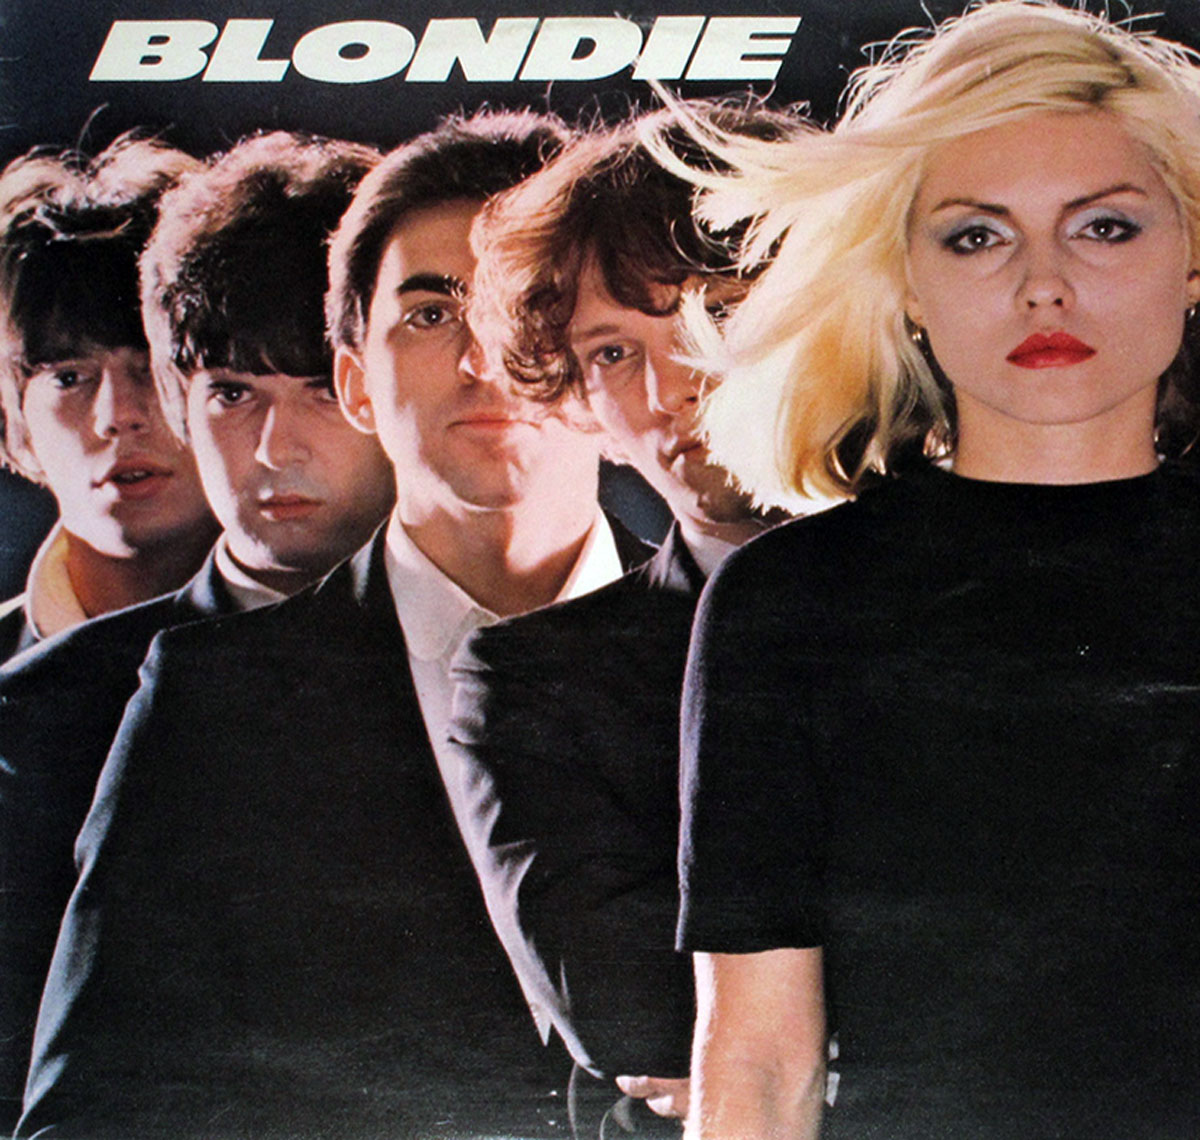 BLONDIE SelfTitled New Wave 12" LP Vinyl Album Cover Gallery